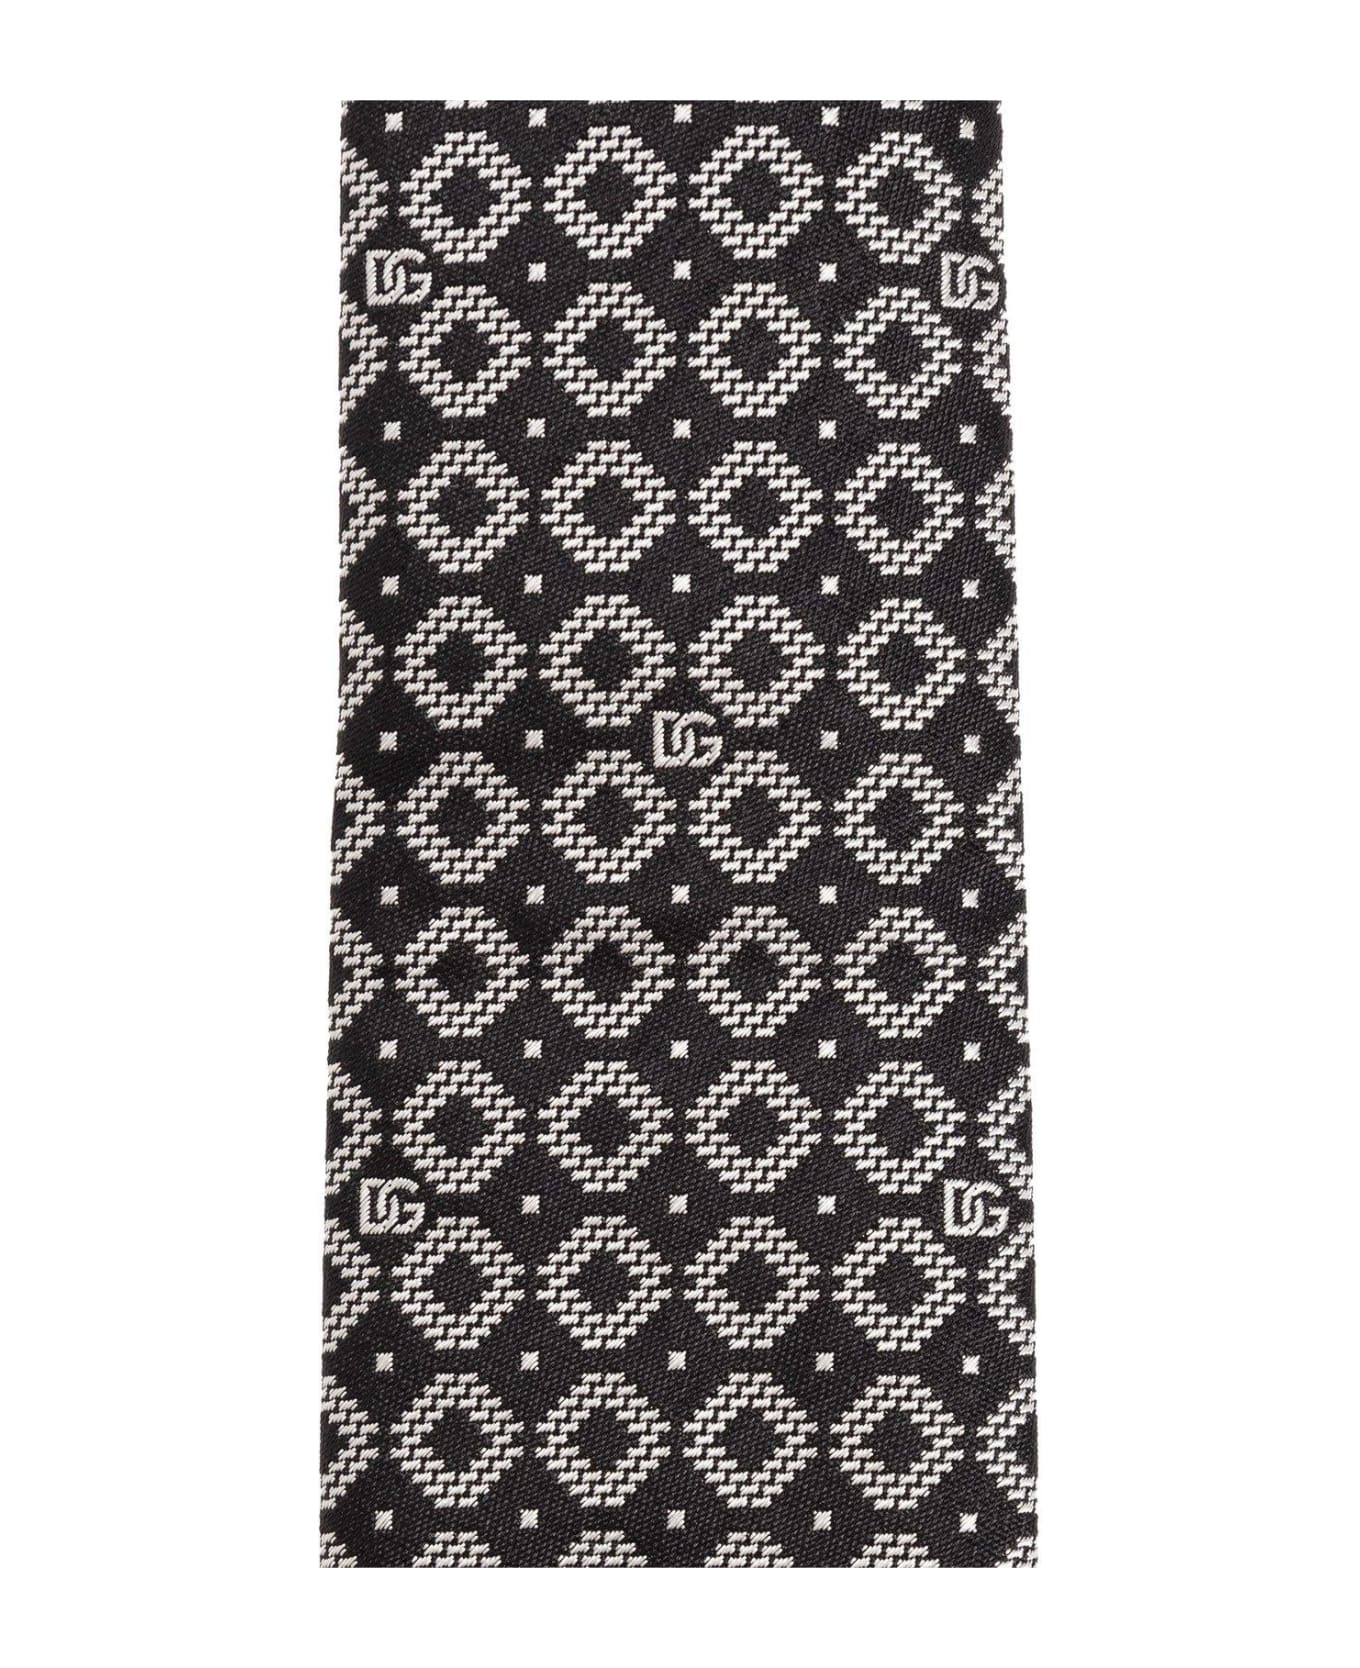 Dolce & Gabbana Dg Logo Jacquard Tie - Nero bianco ネクタイ